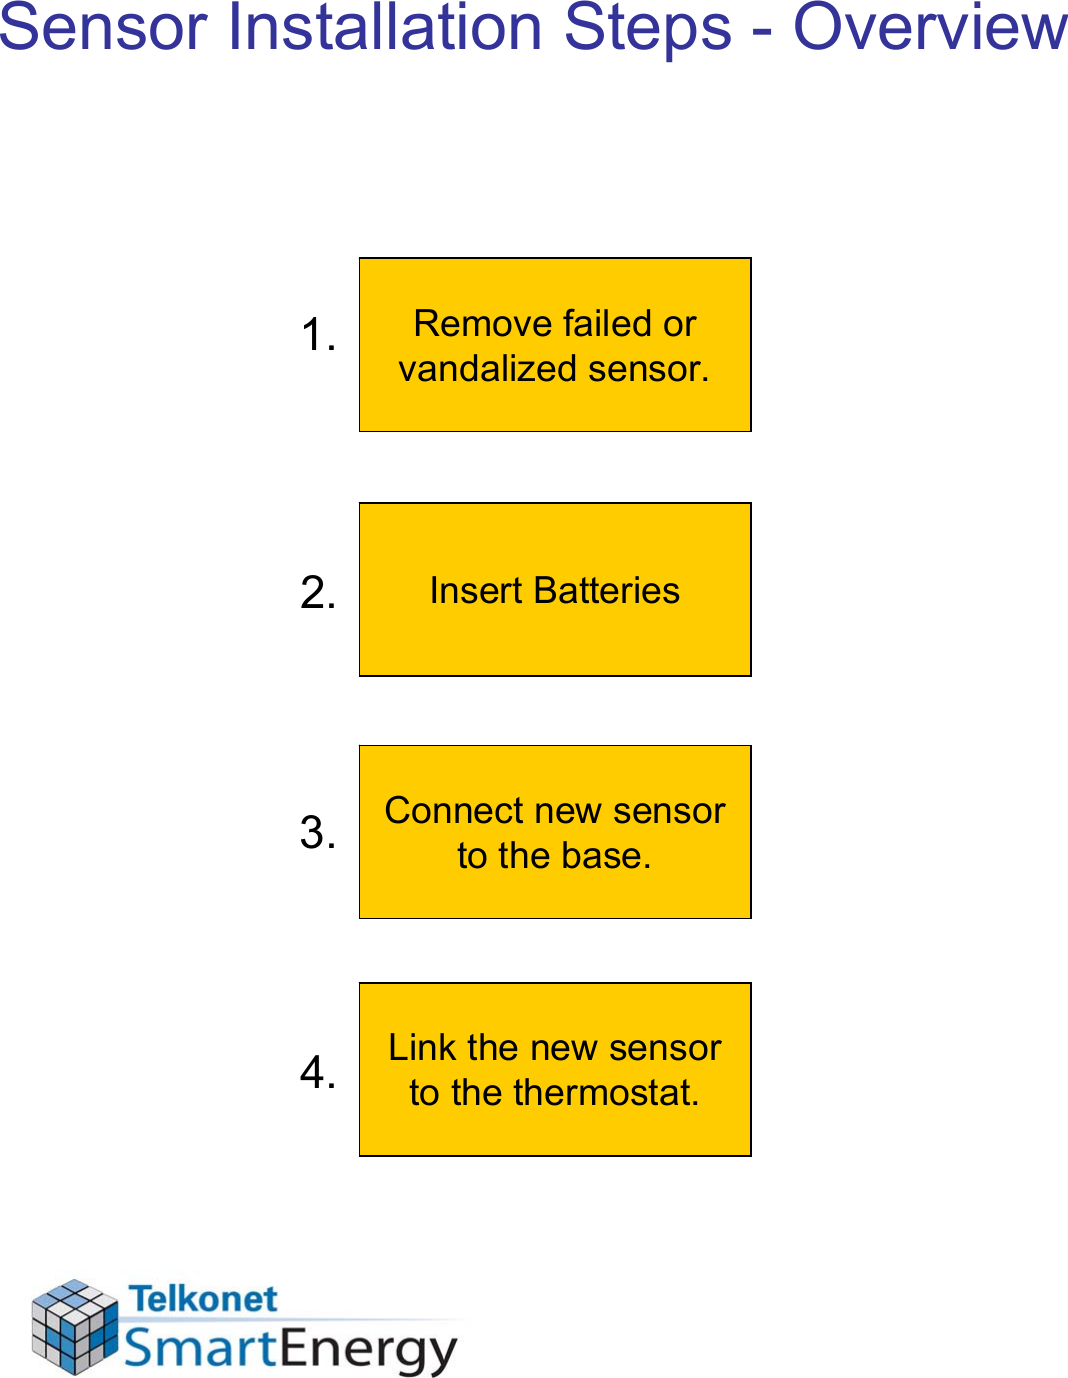 Sensor Installation Steps - OverviewRemove failed or vandalized sensor.Insert BatteriesConnect new sensor to the base.Link the new sensor to the thermostat.1.2.3.4.